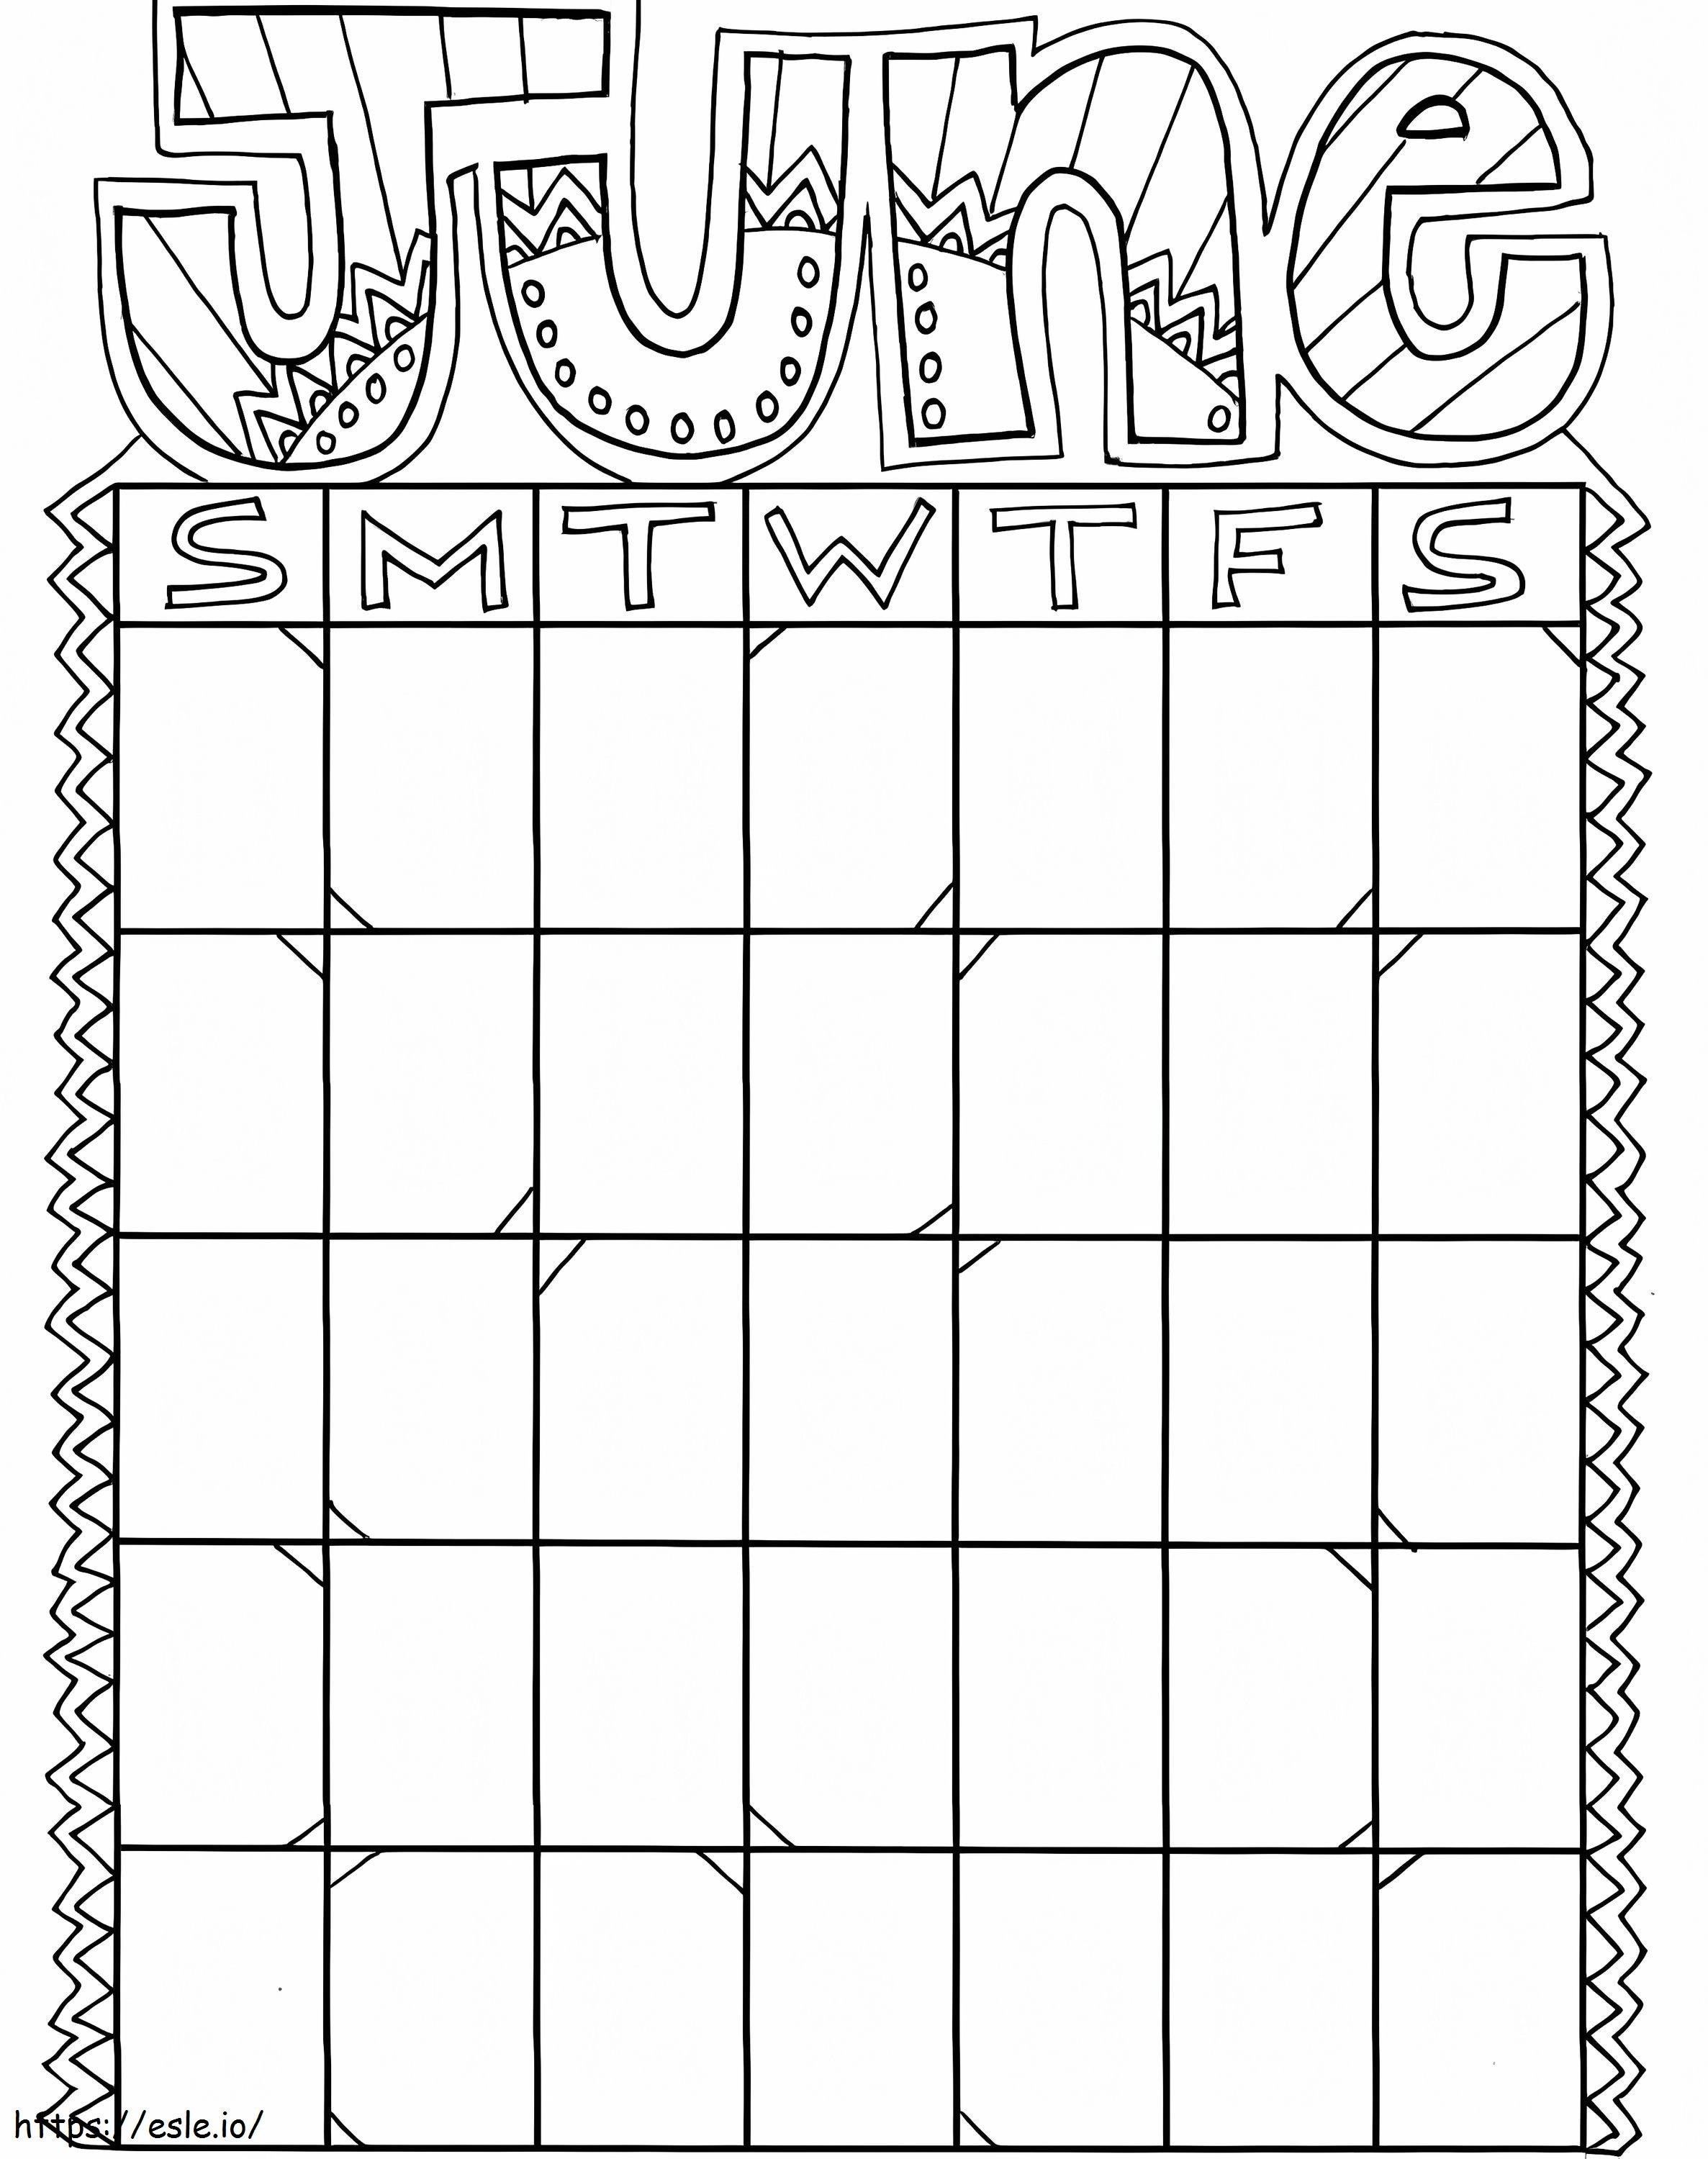 June 1 Calendar coloring page